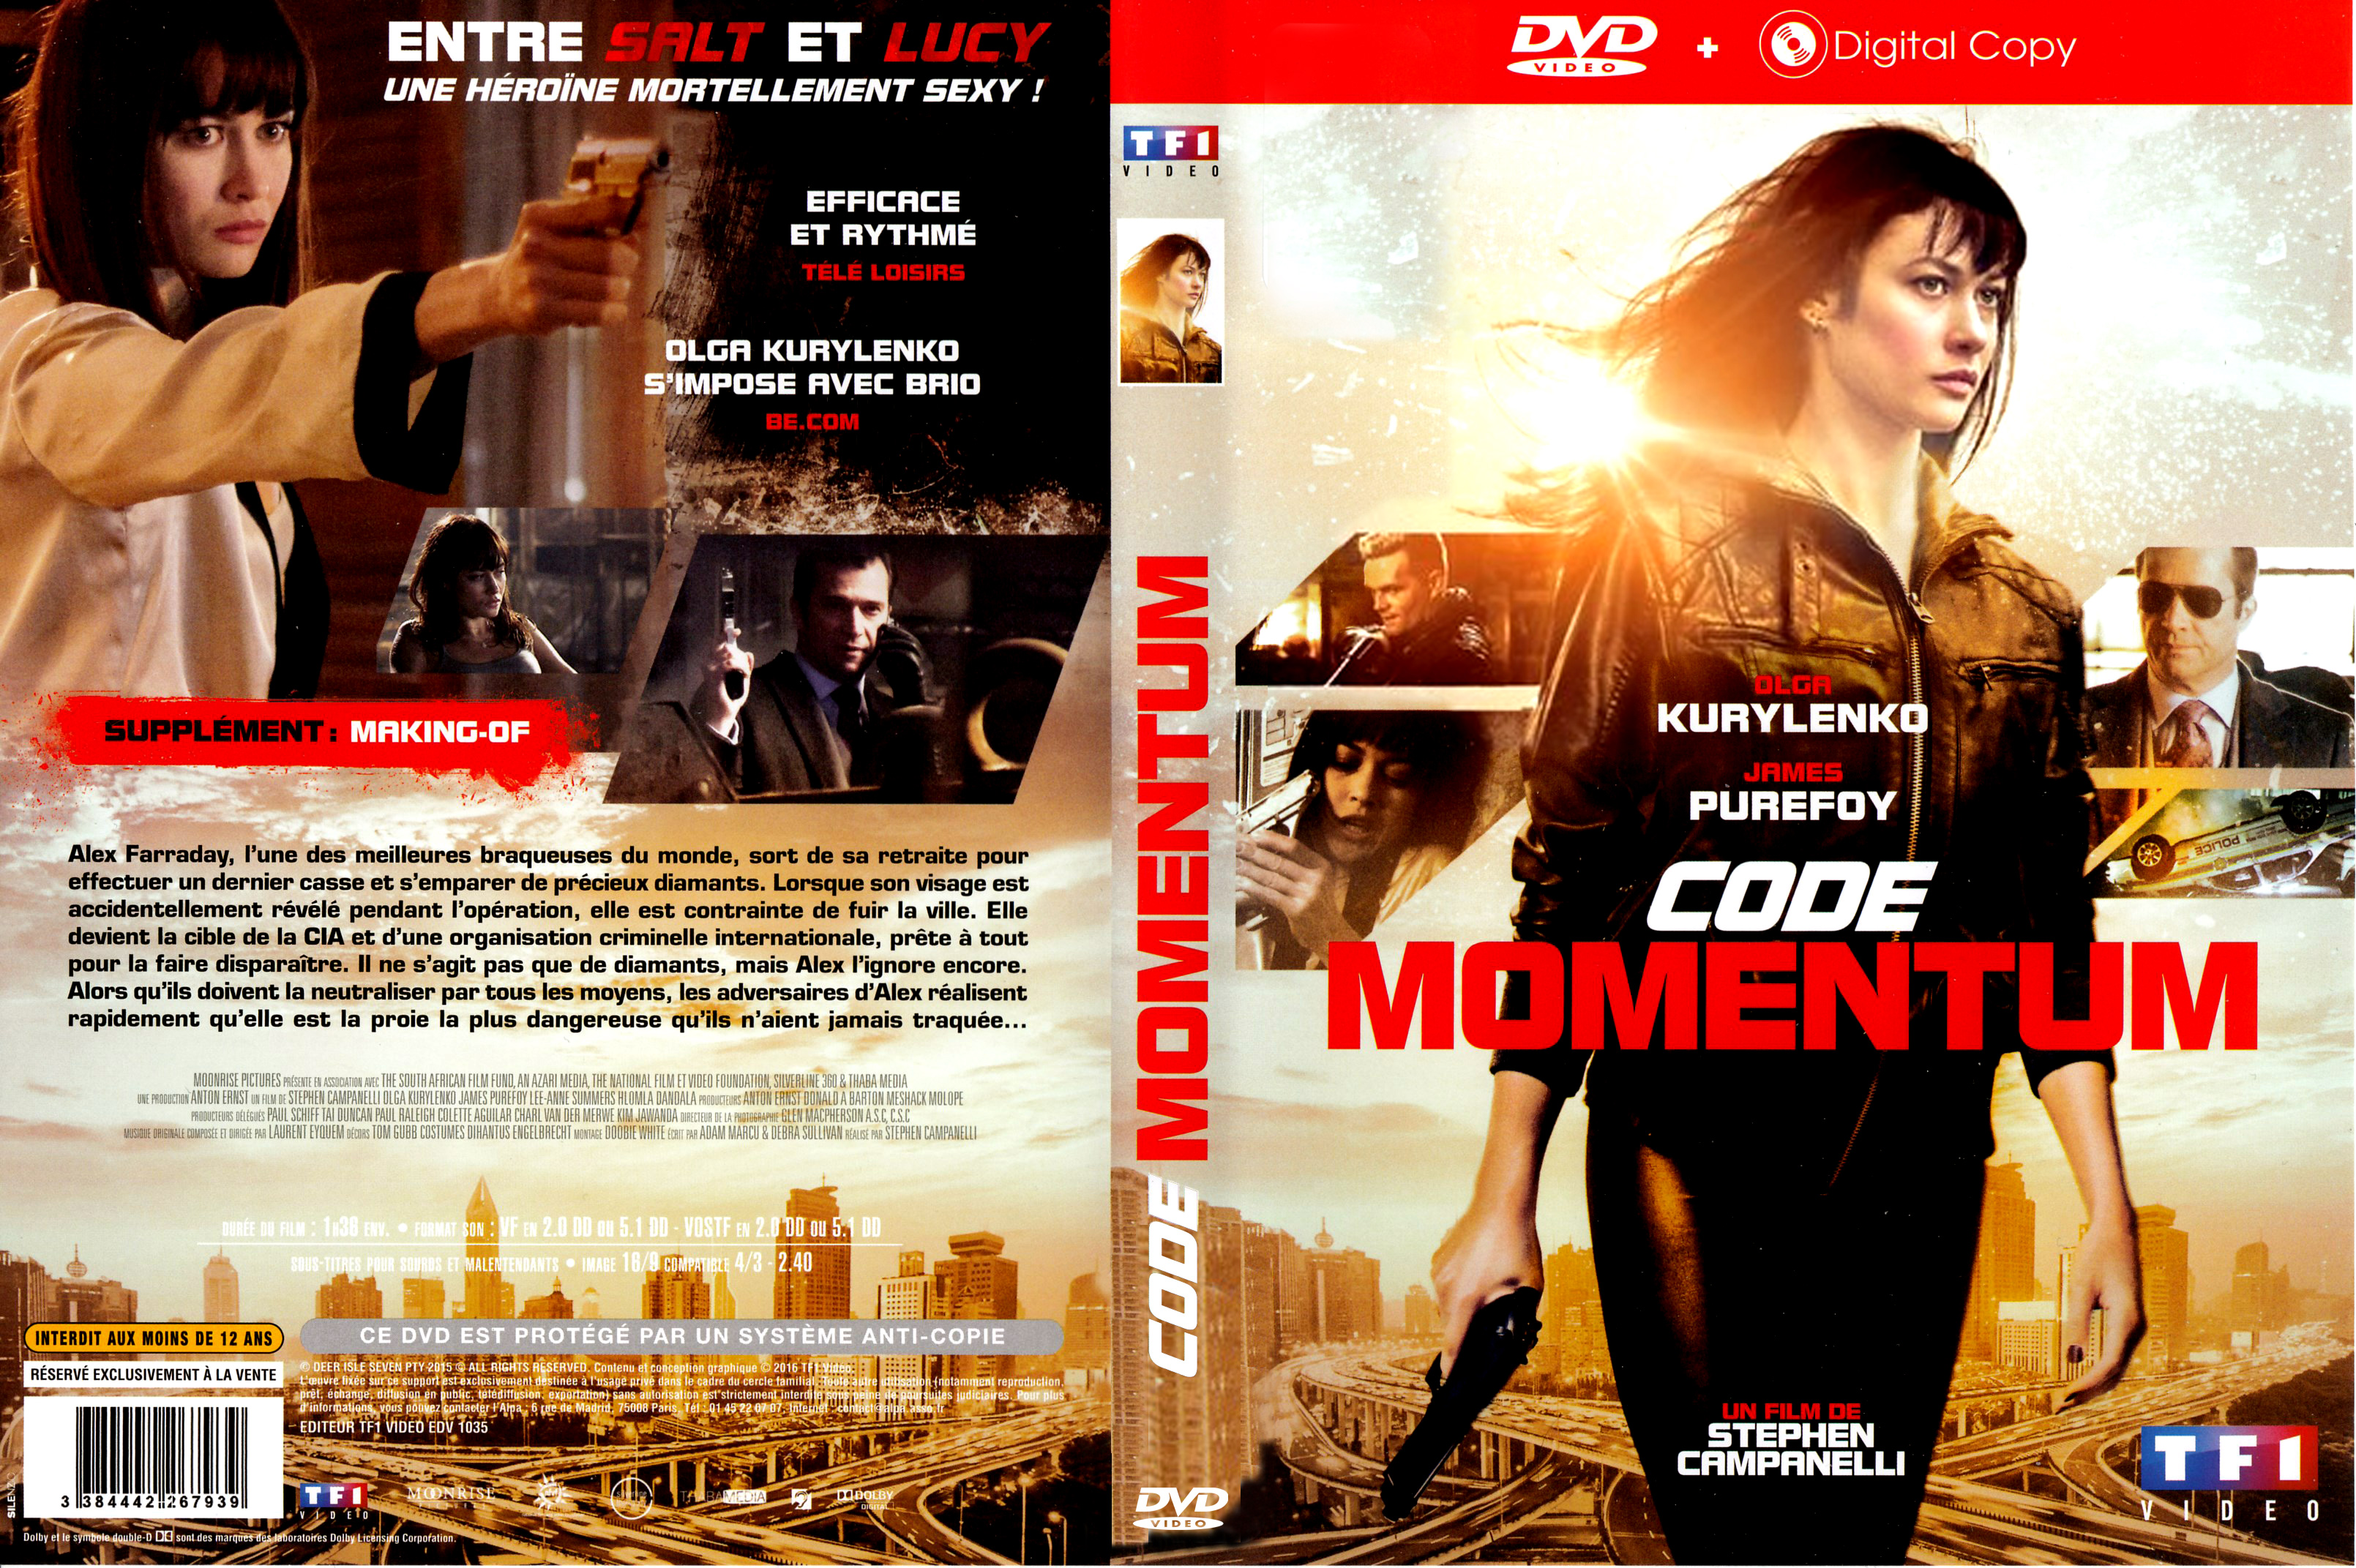 Jaquette DVD Code Momentum